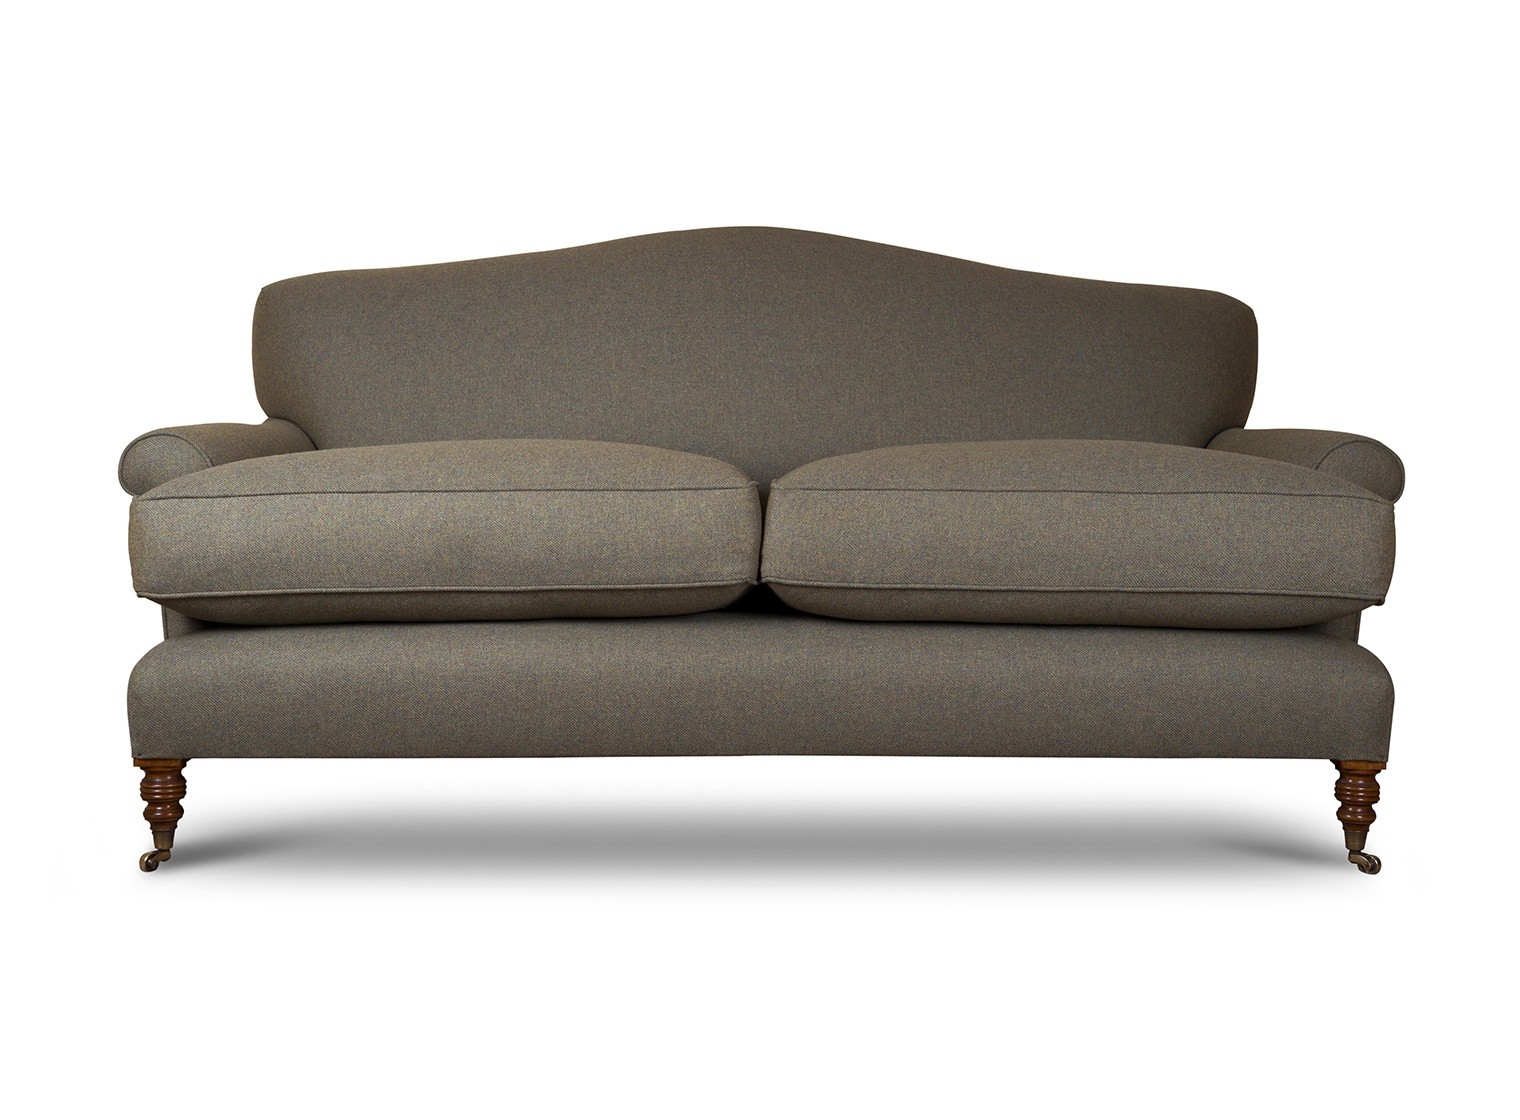 Wexford 2.5 seater sofa in Donegal linen - Laurel - Beaumont & Fletcher